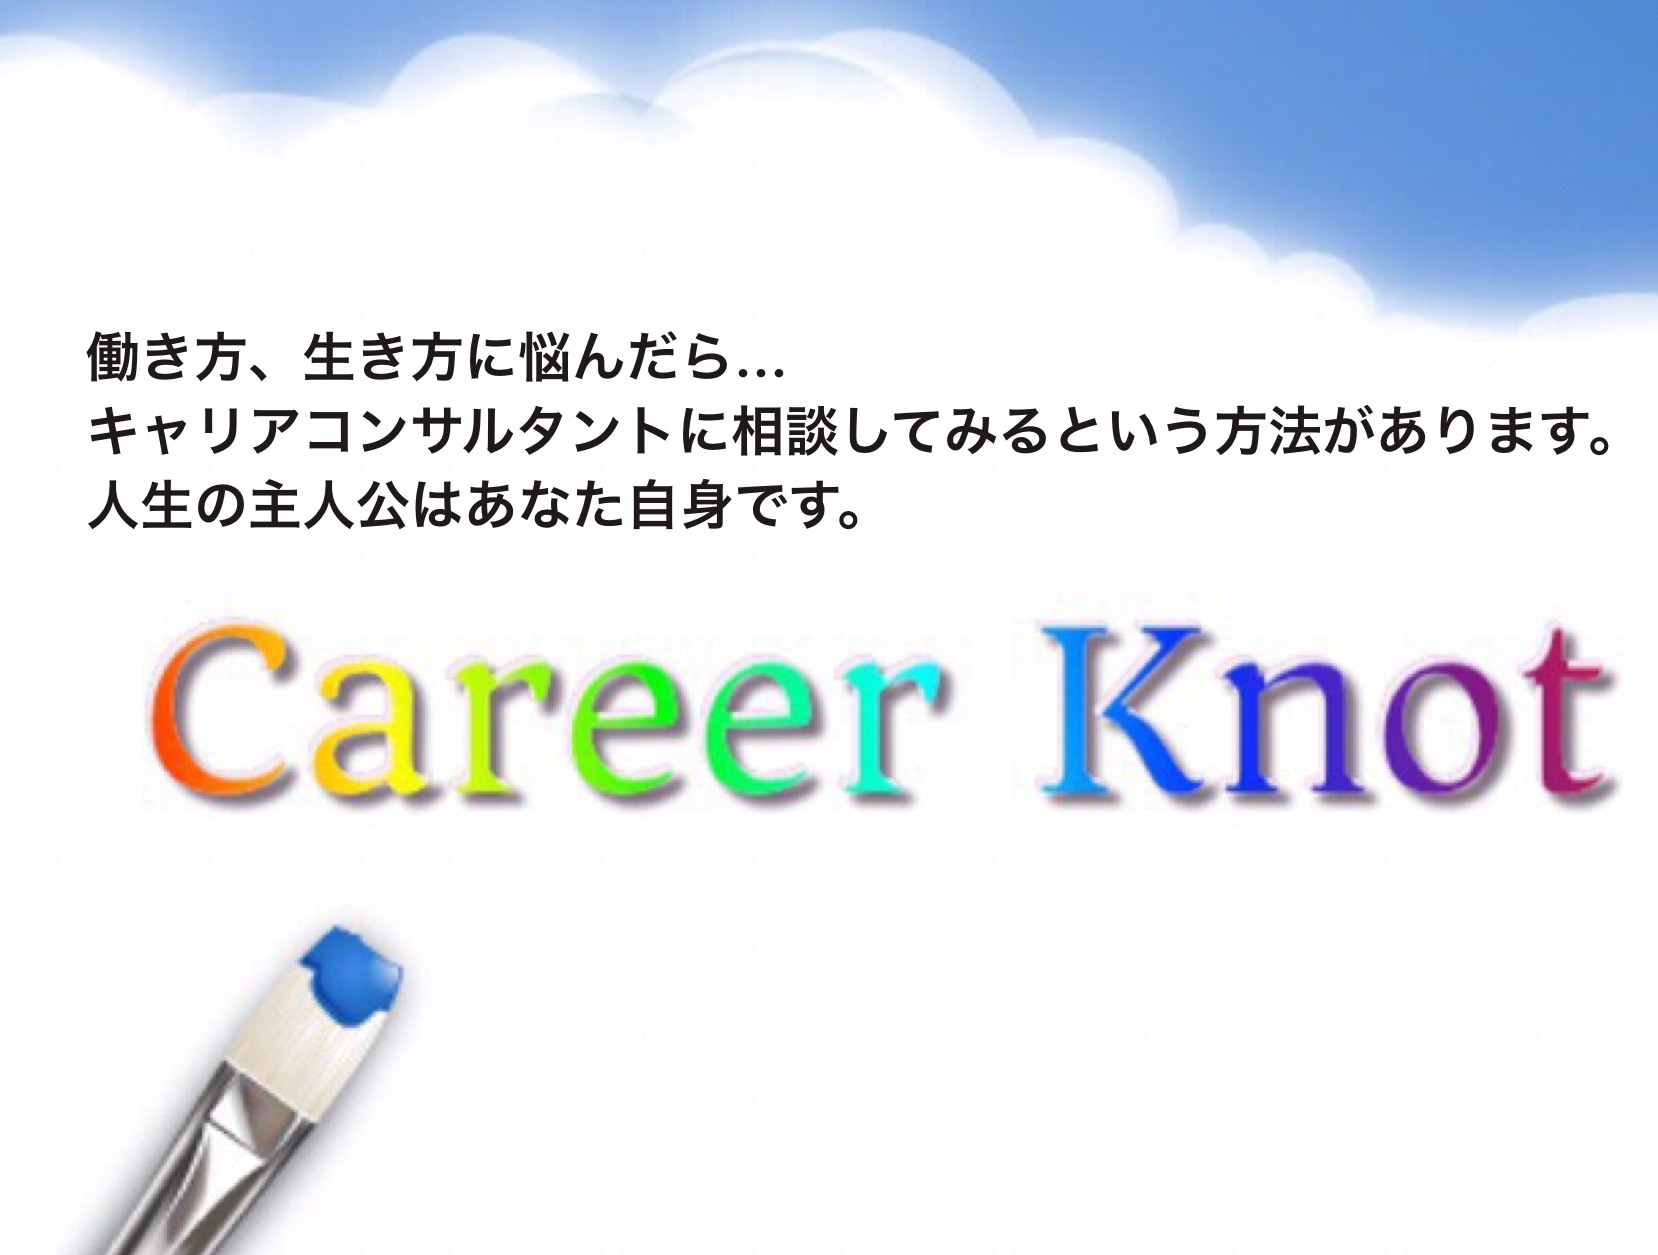 Career Knot